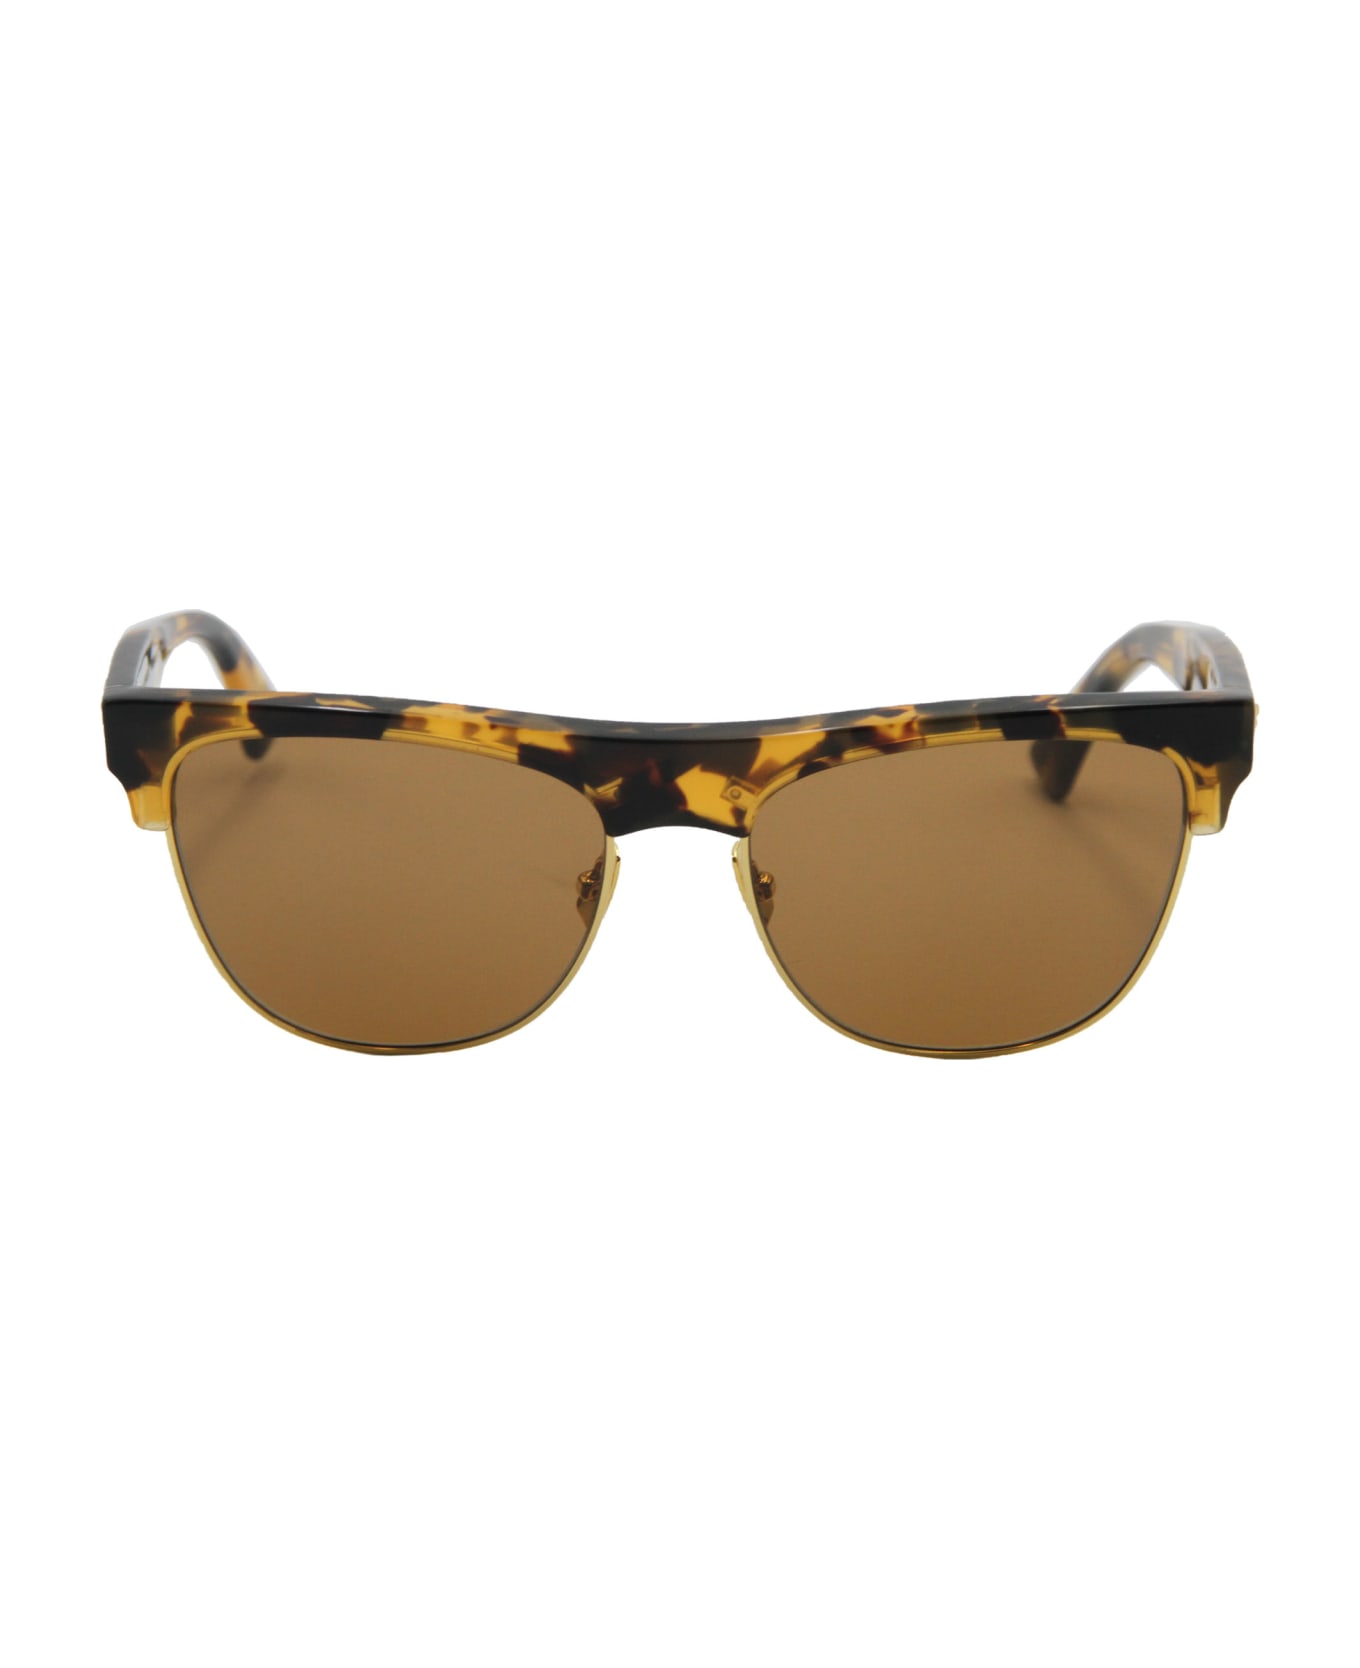 Bottega Veneta Eyewear Squared Sunglasses - Multicolor